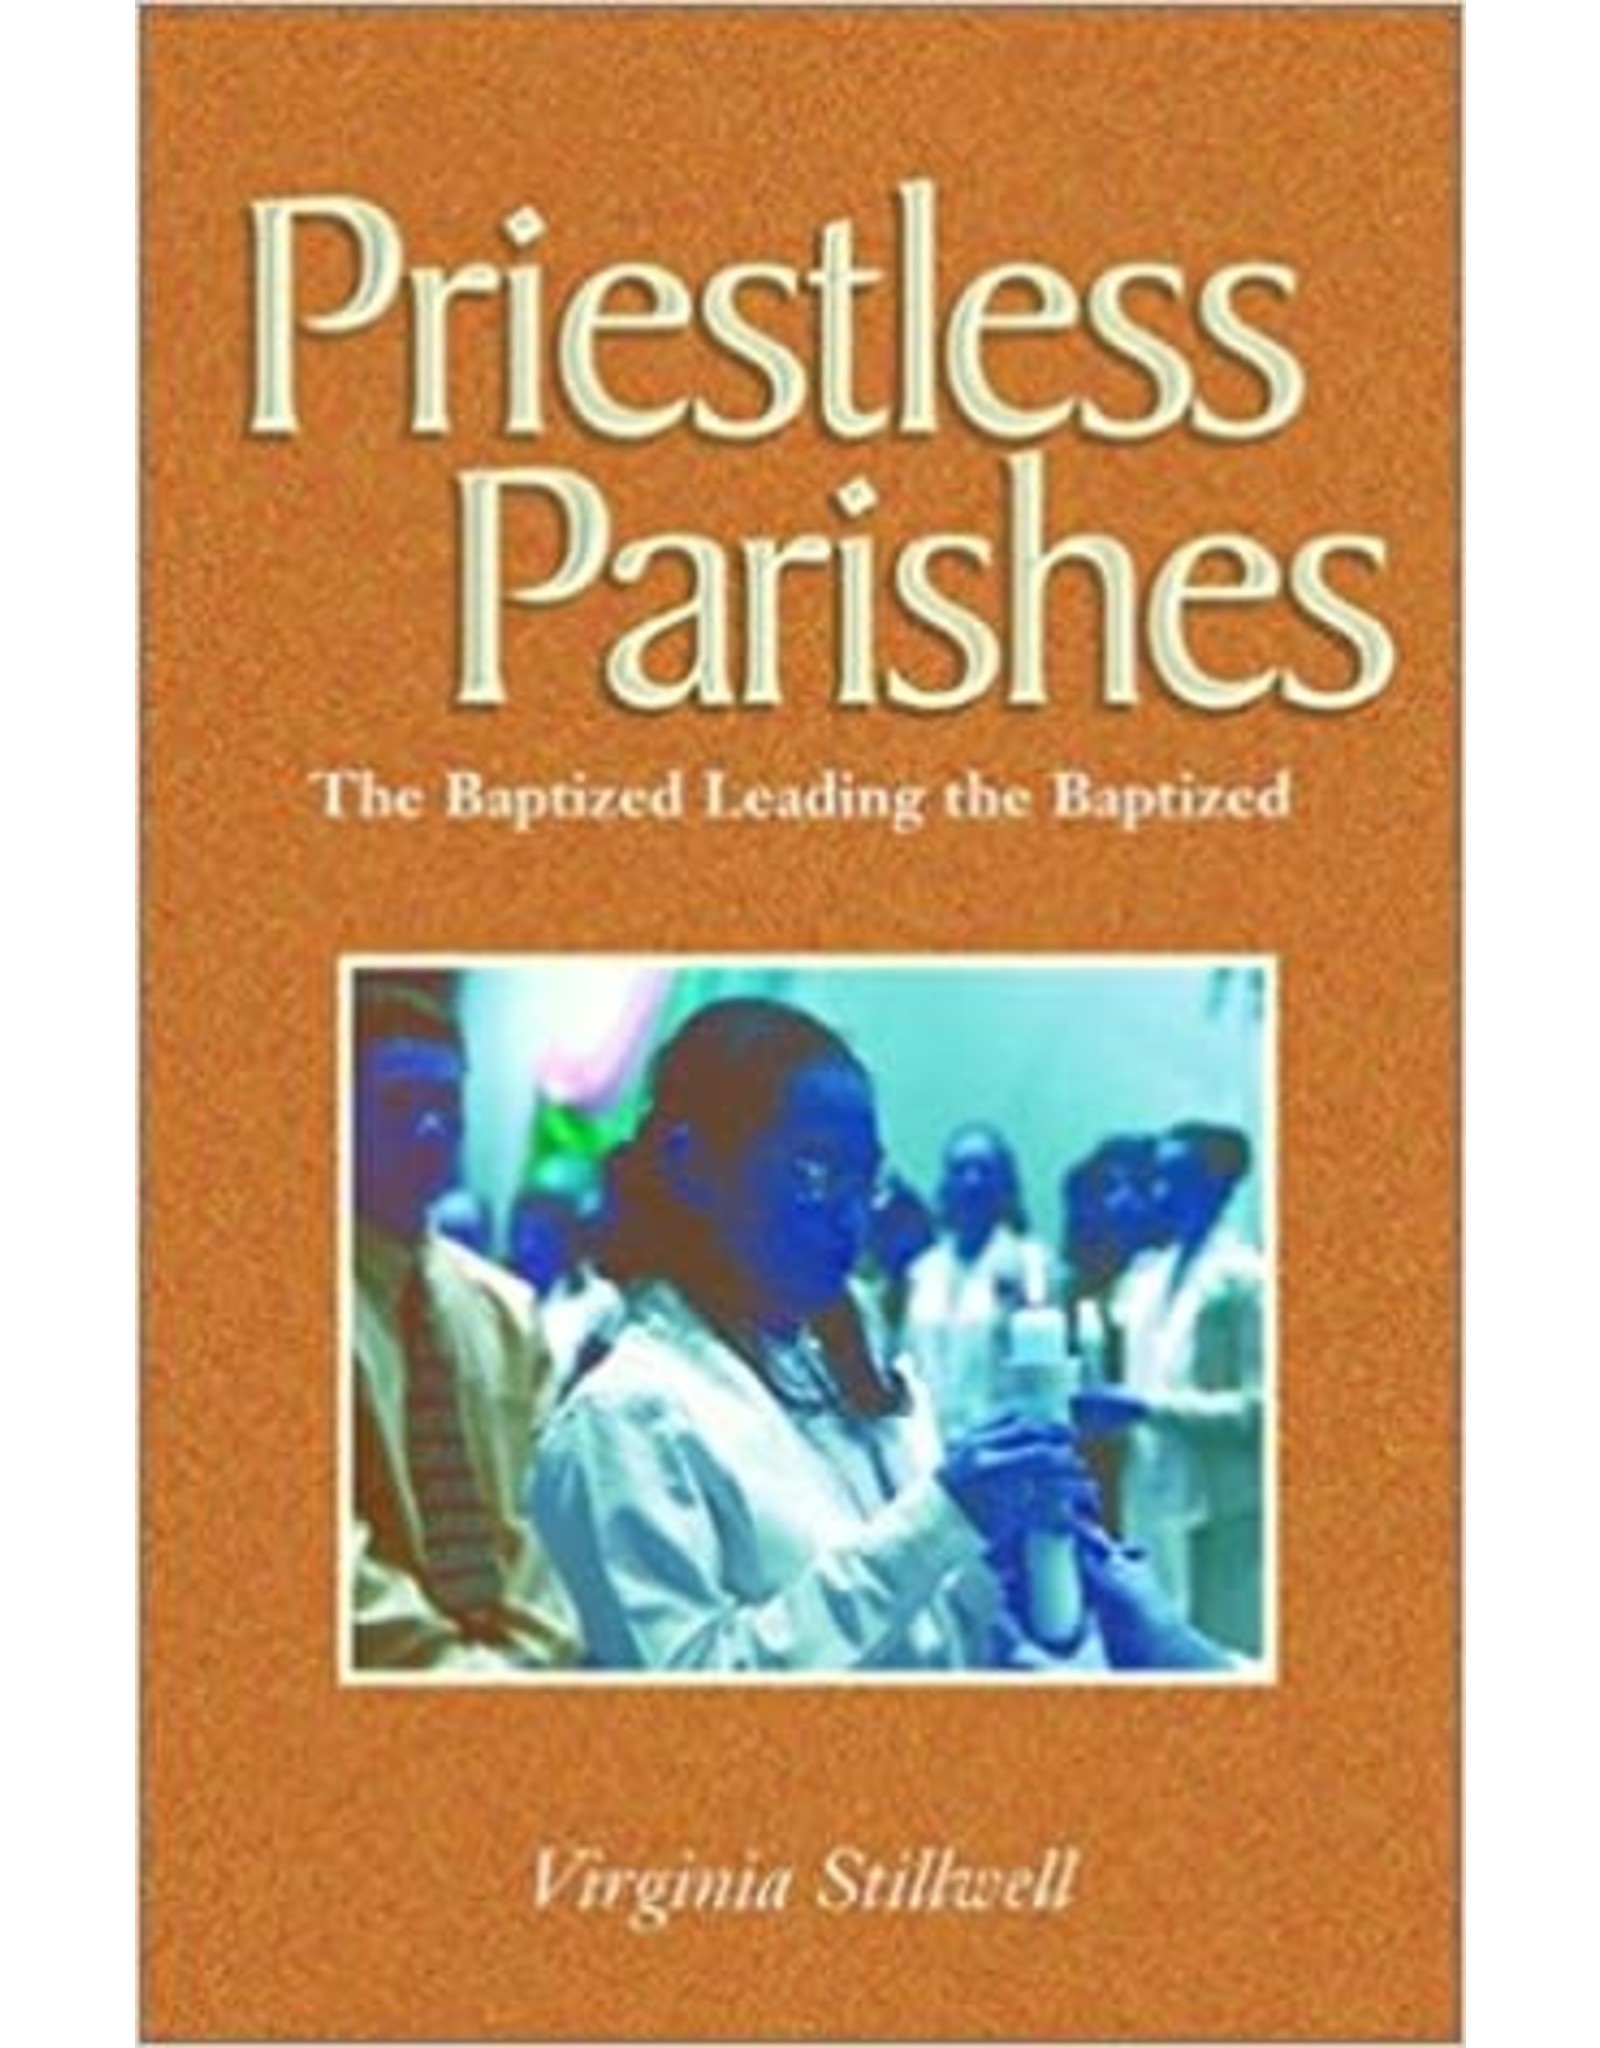 Ave Maria Priestless Parishes: The Baptized Leading the Baptized